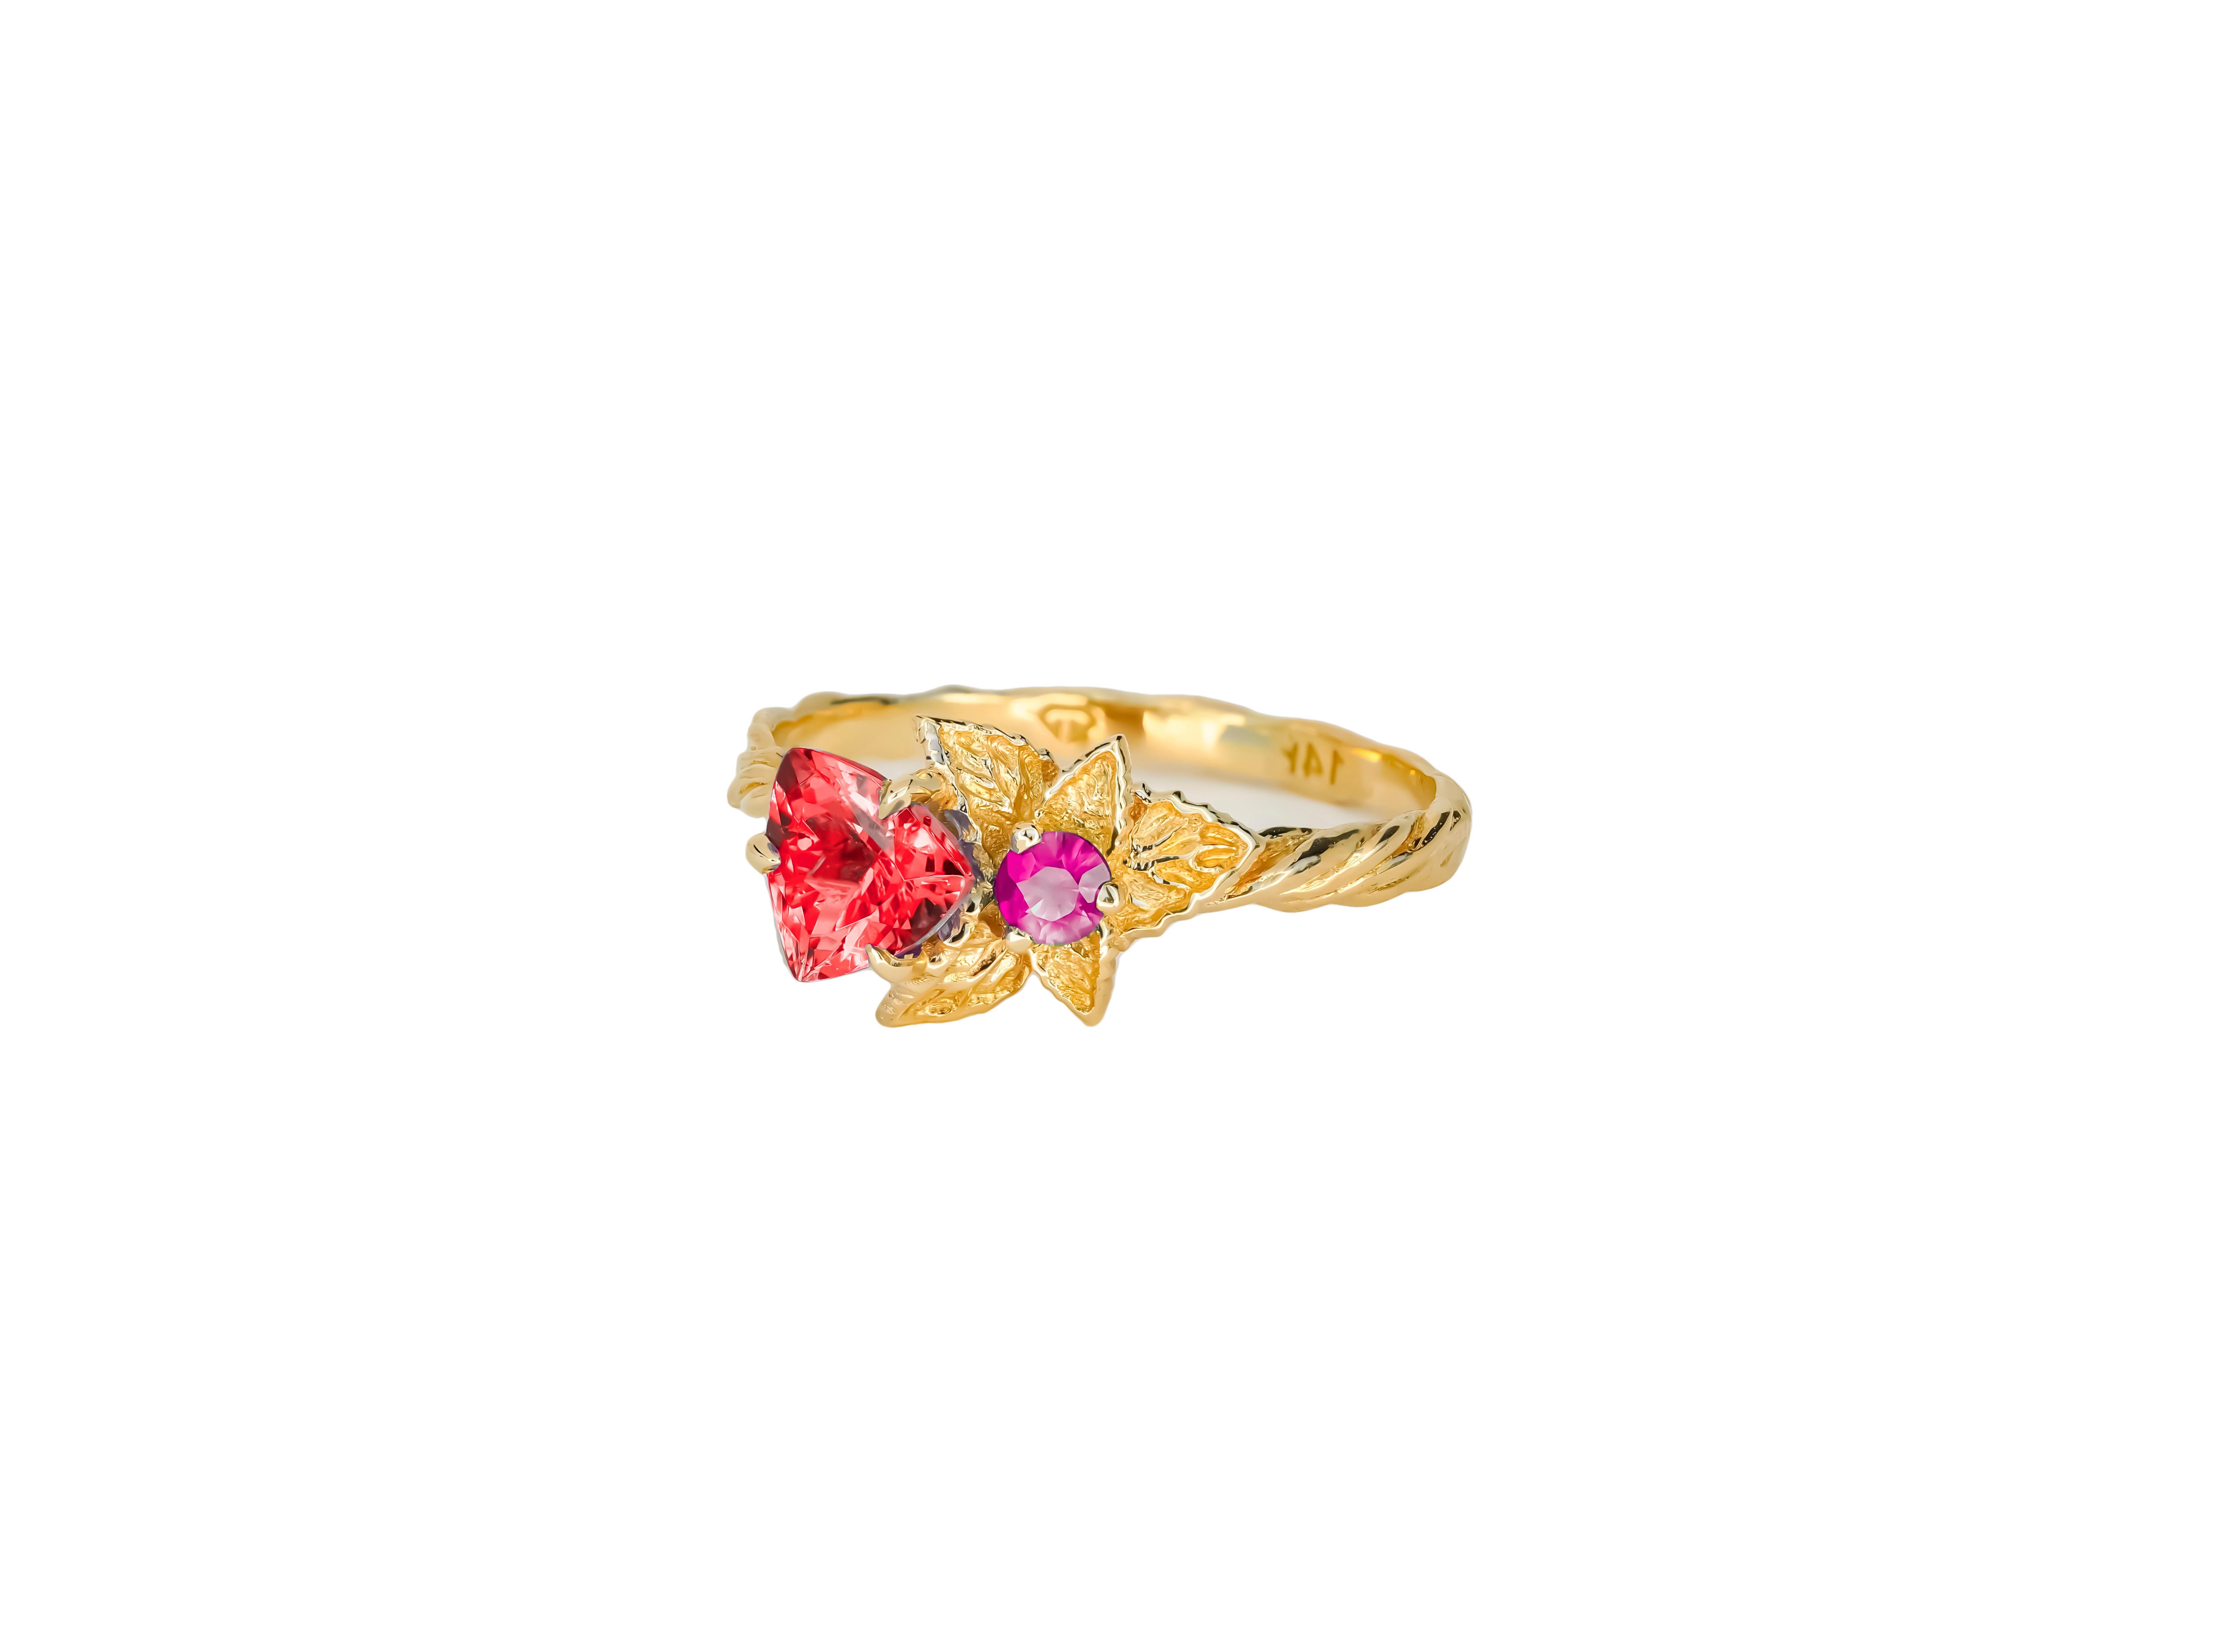 For Sale:  Flower red, purple gemstone 14k gold ring. 3